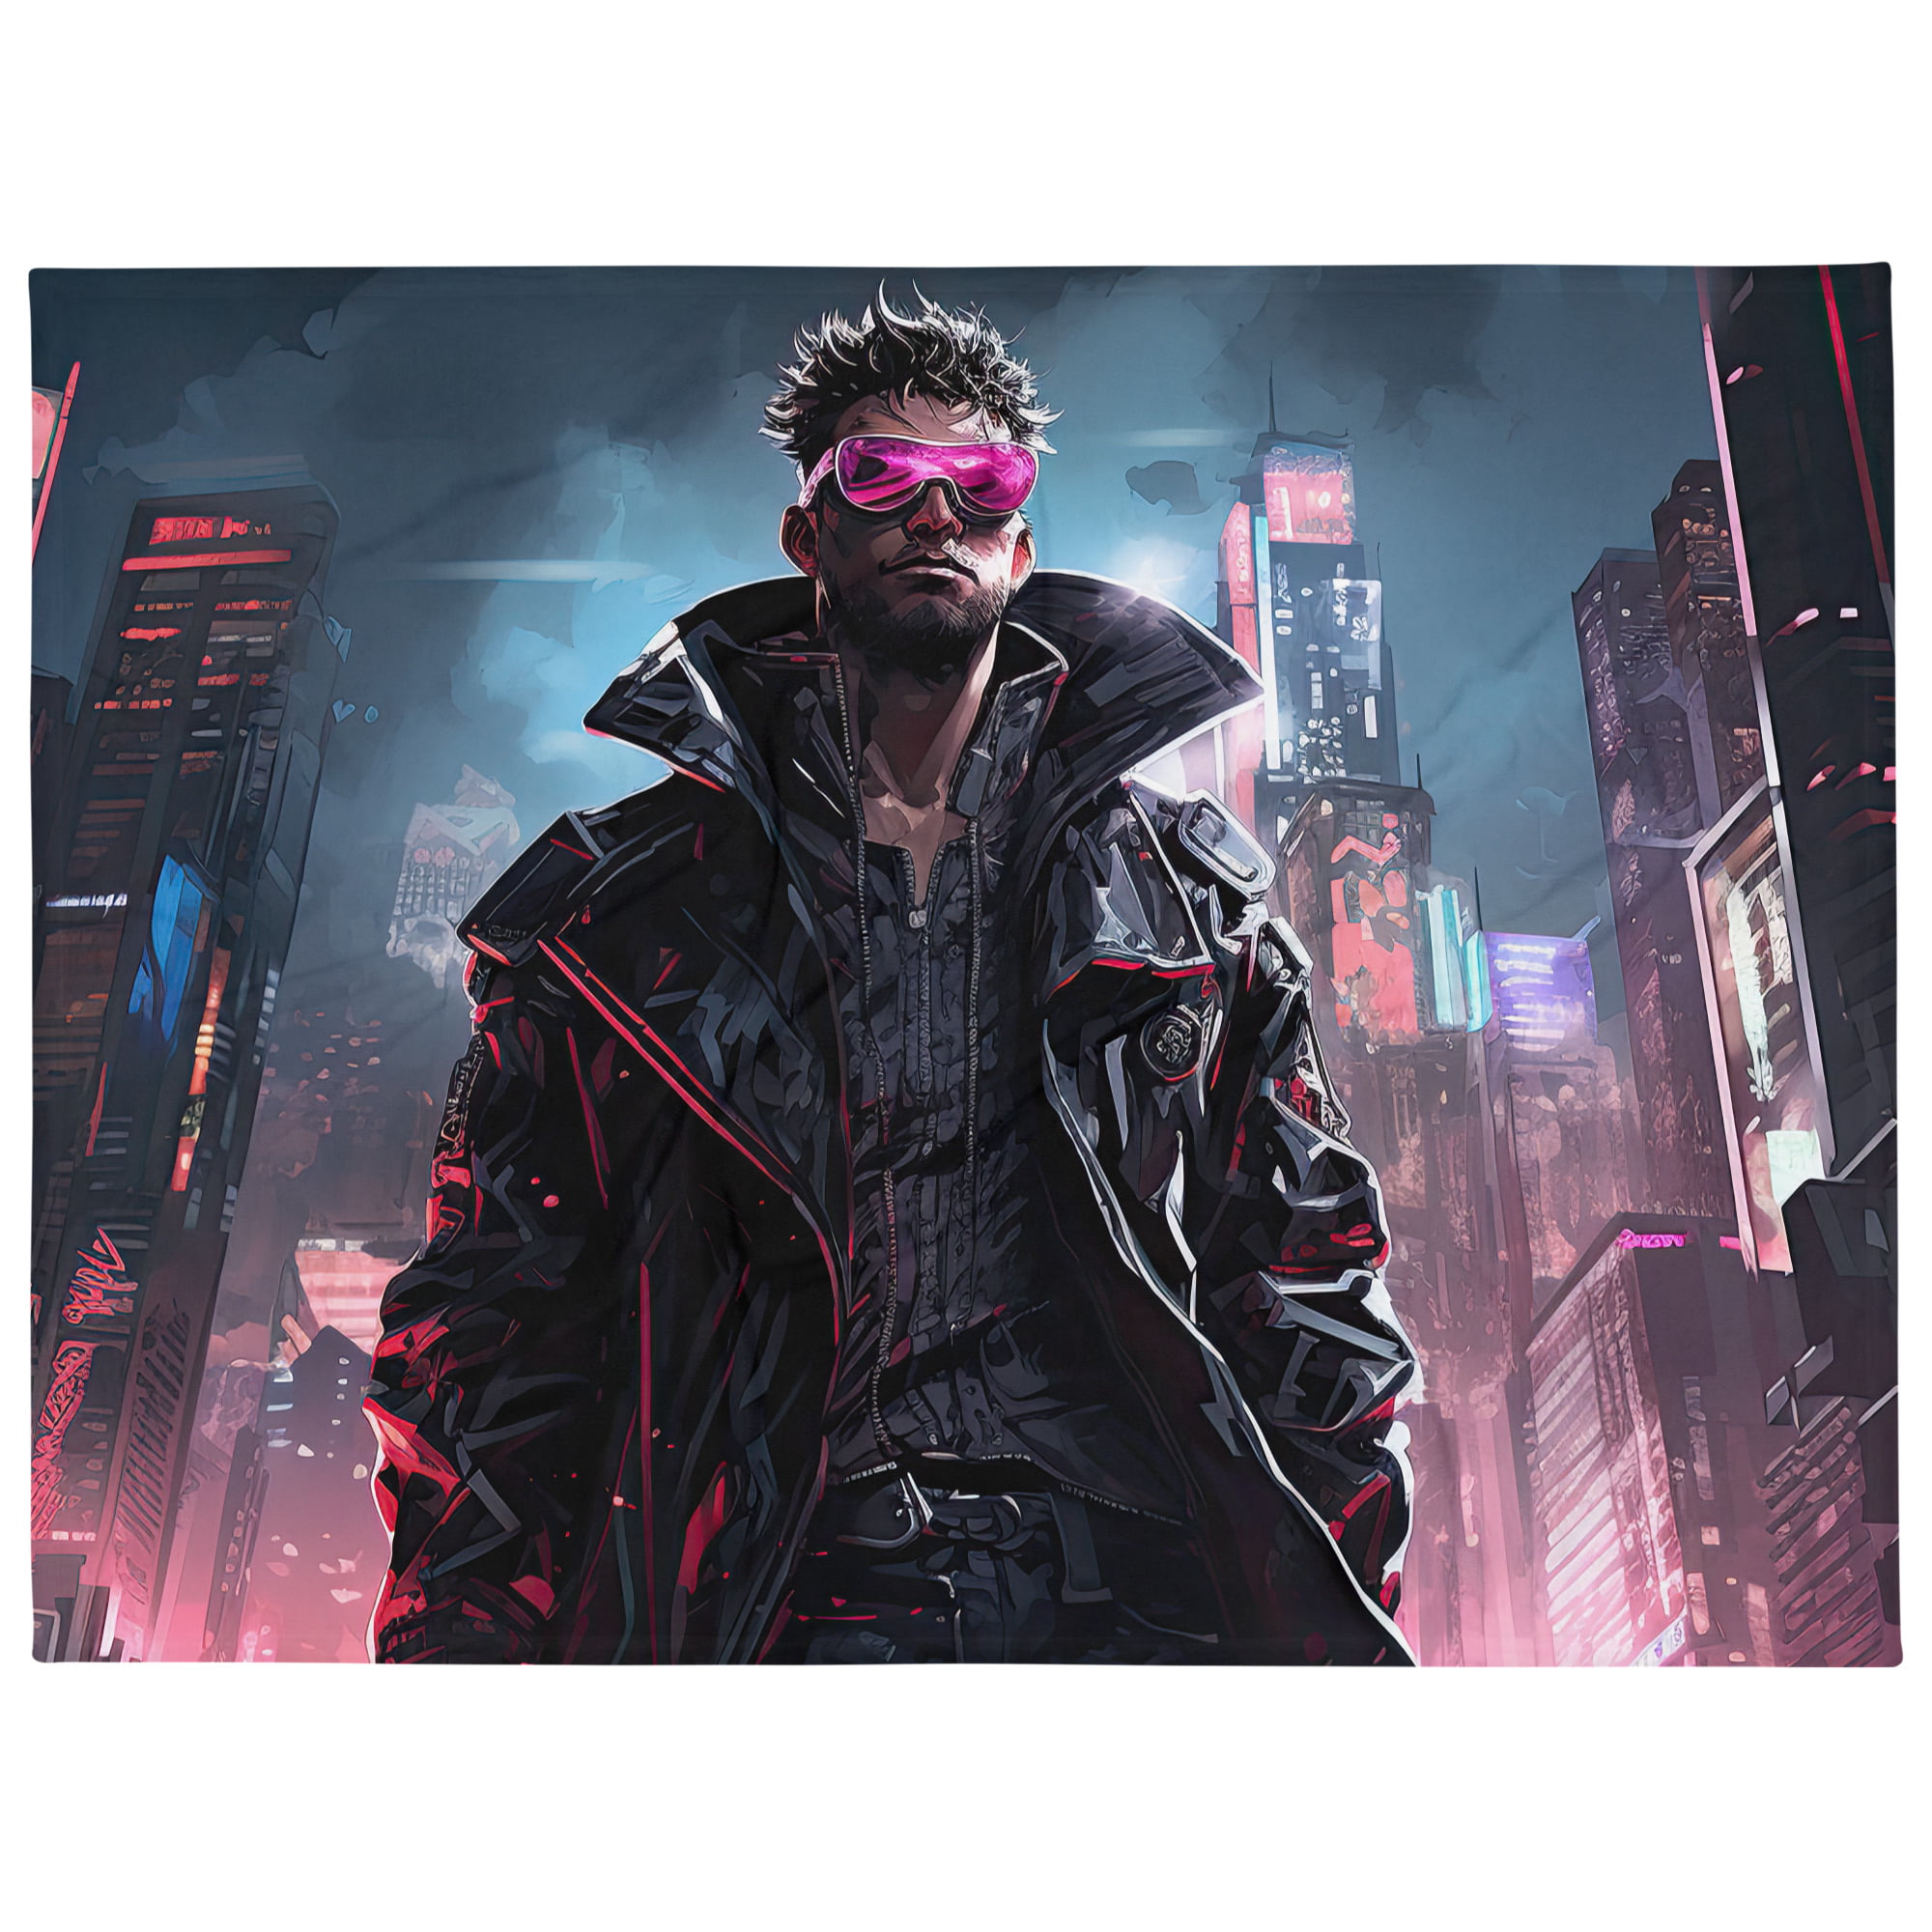 Cool Cyberpunk Dude Throw Blanket – 60×80